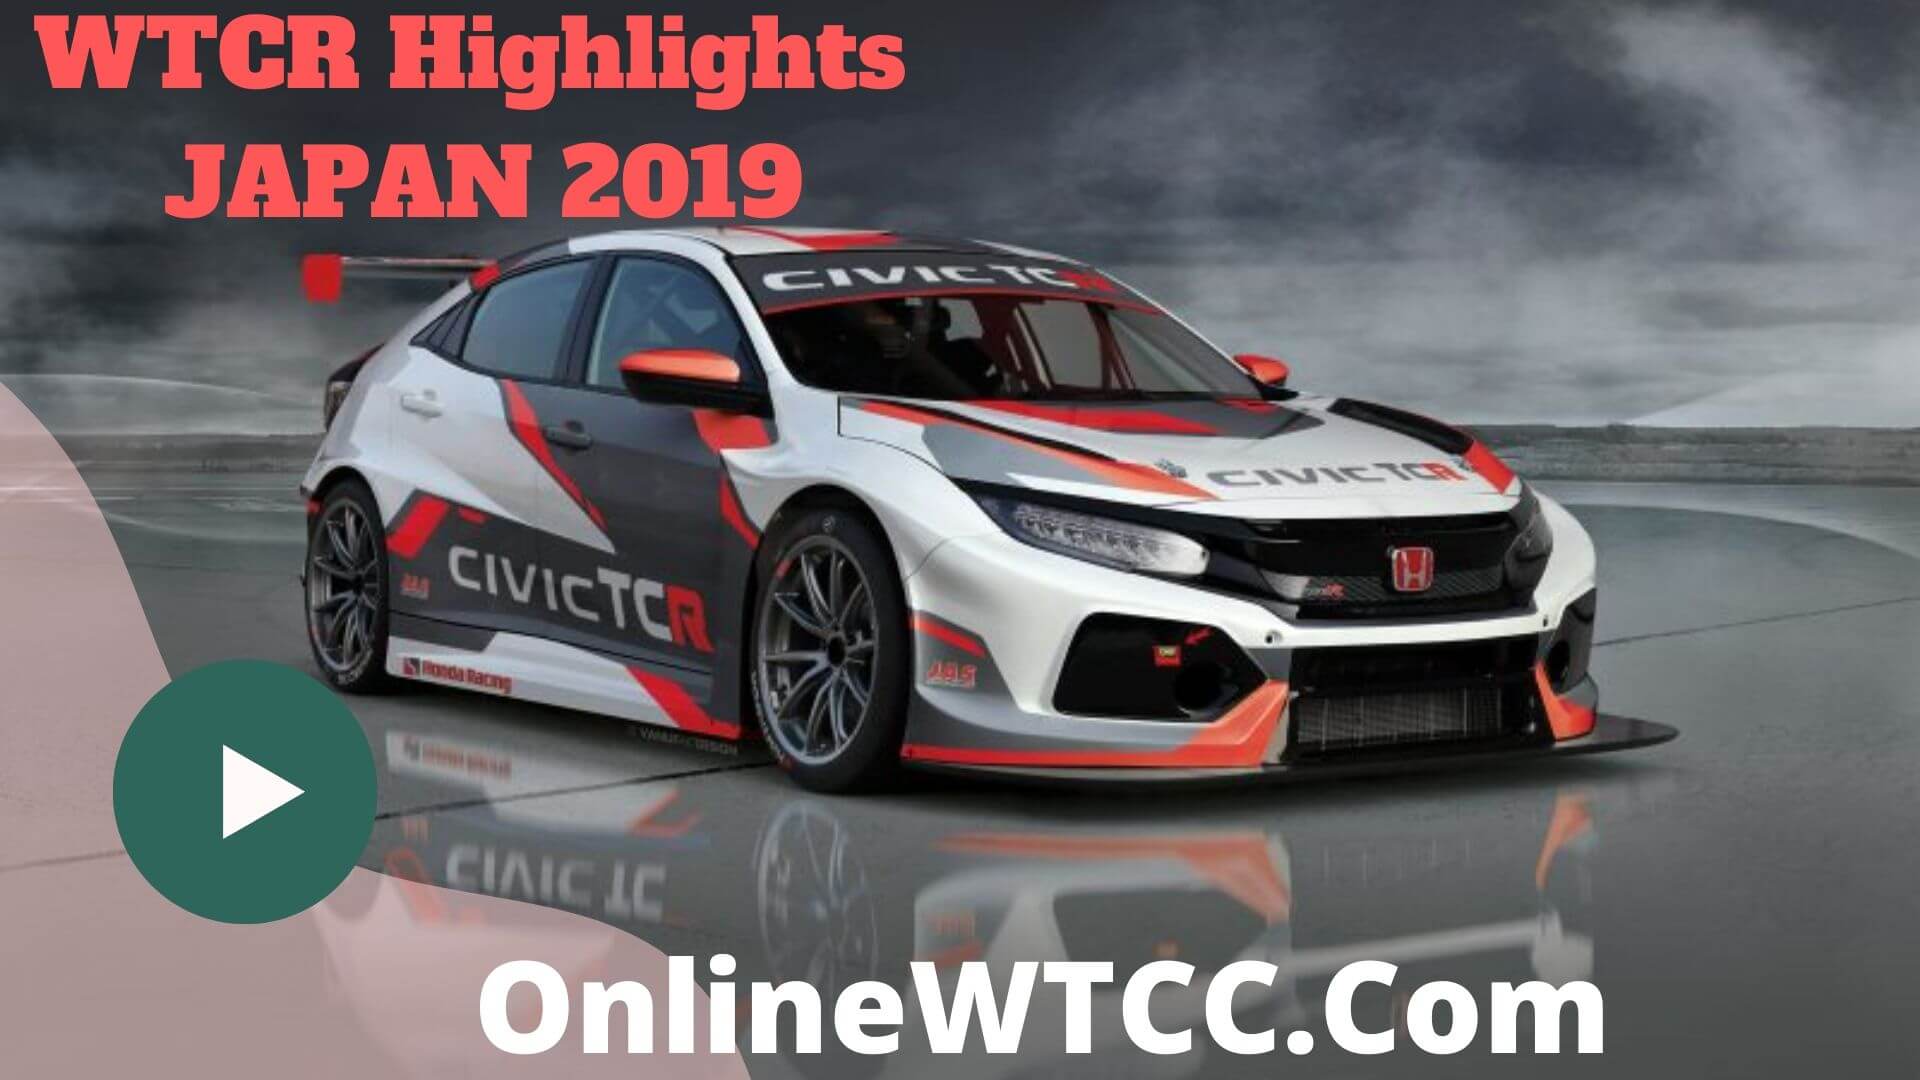 Japan WTCR Highlights 2019